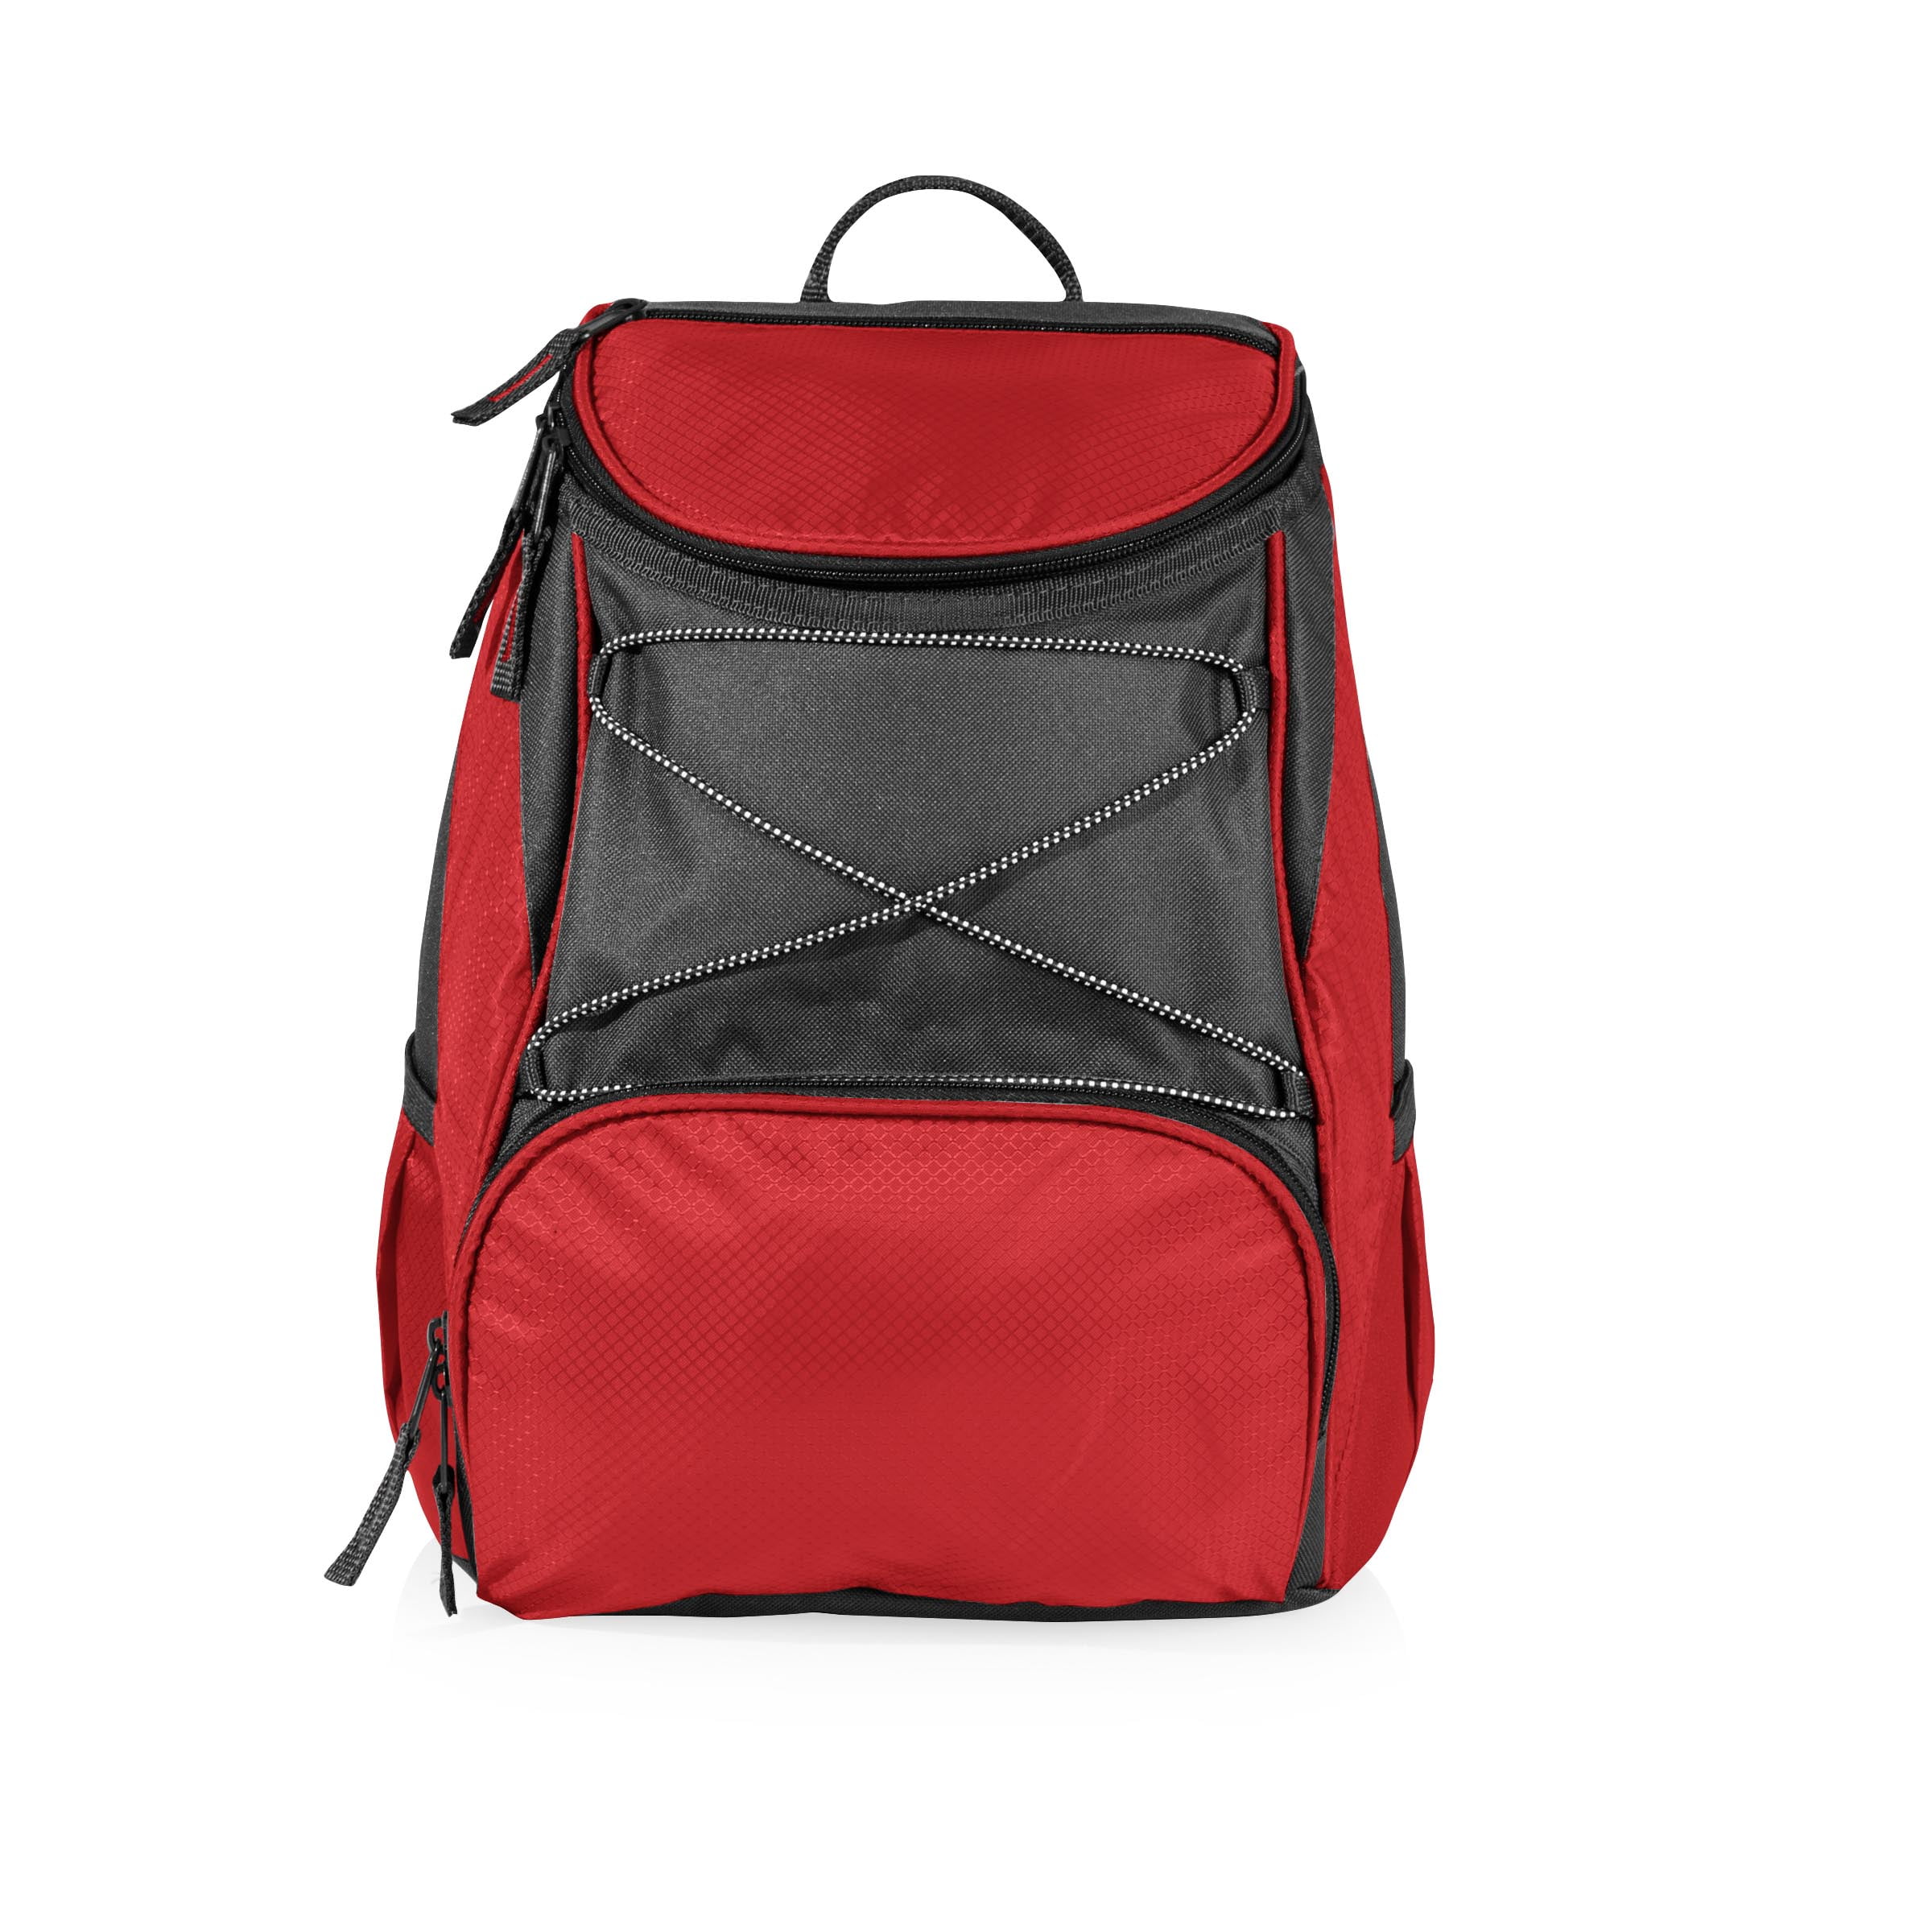 backpack cooler walmart